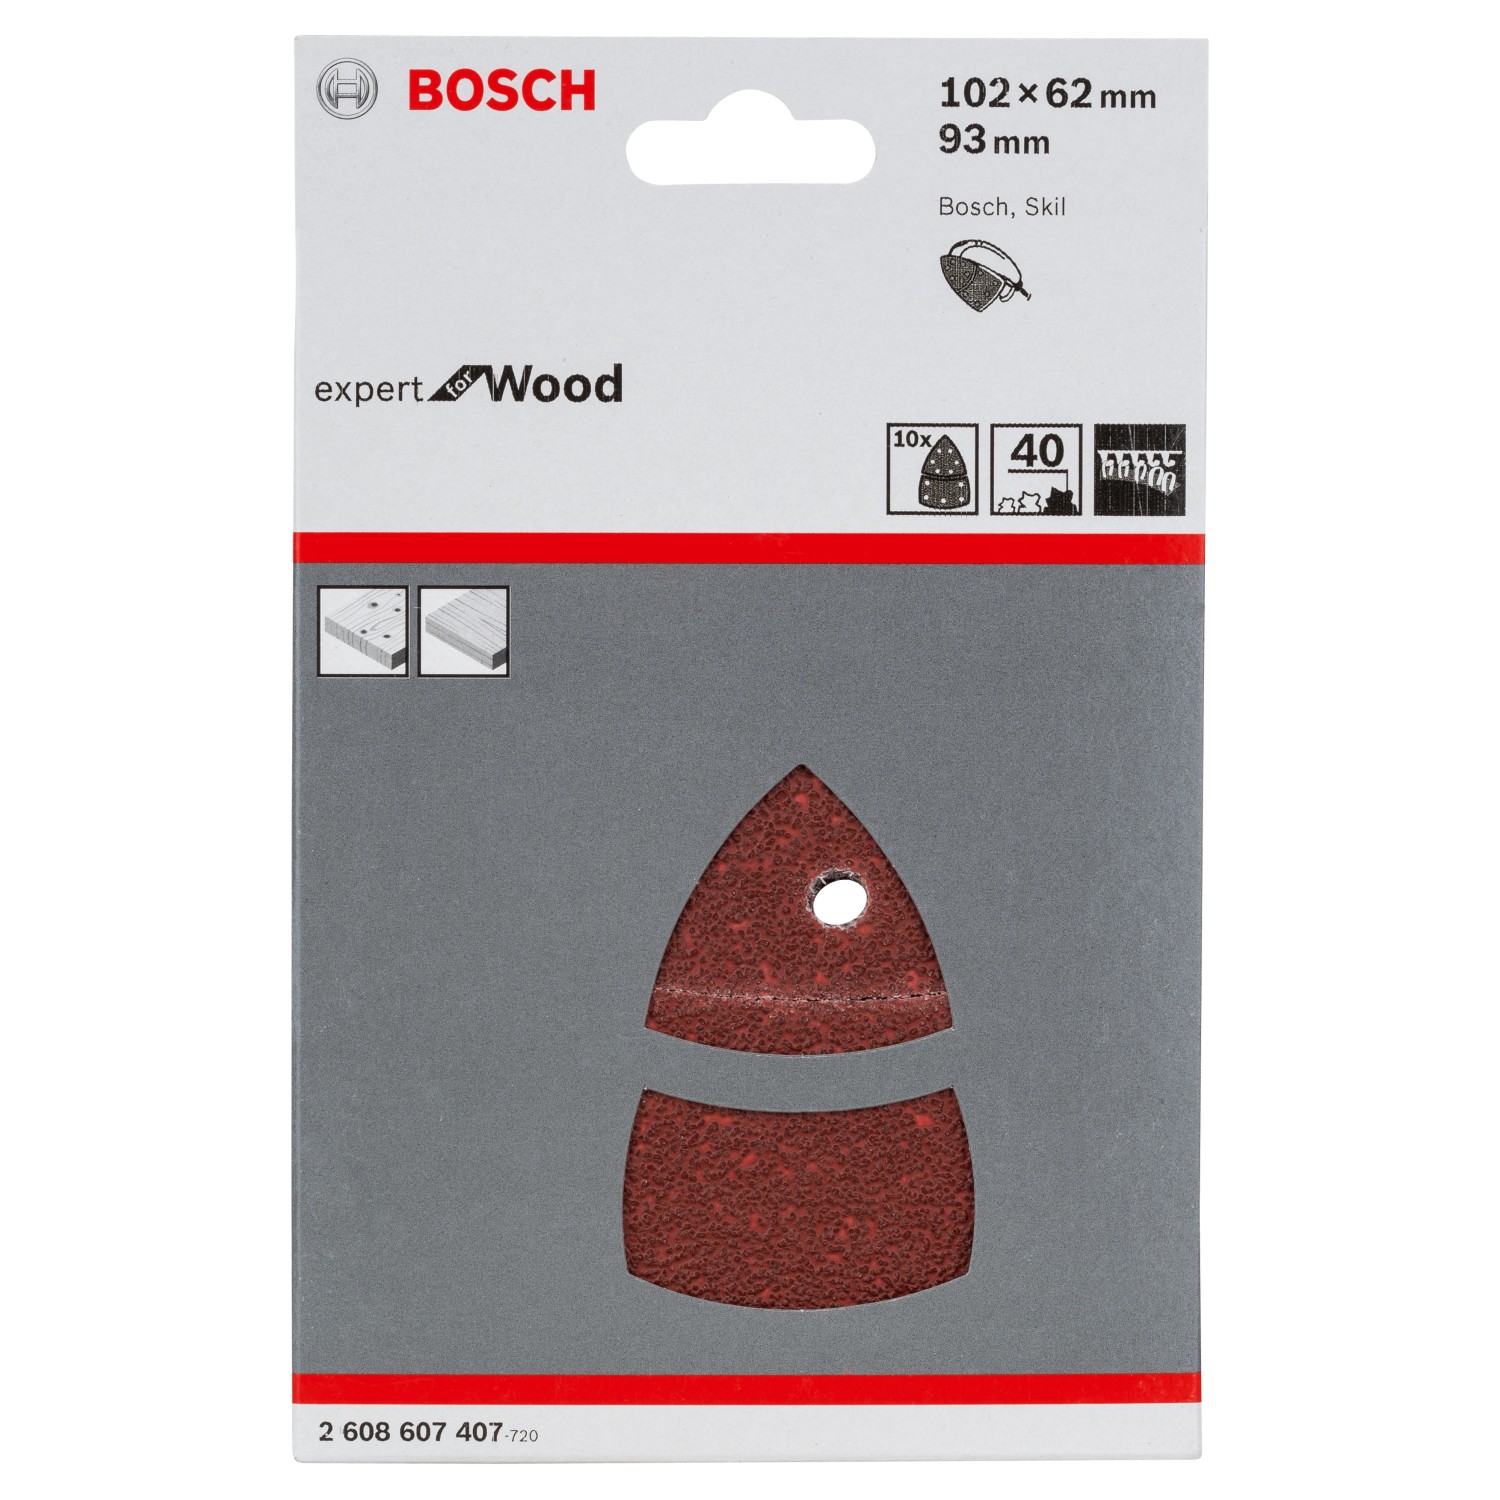 Bosch Schleifblatt-Set C430 Körnung 40